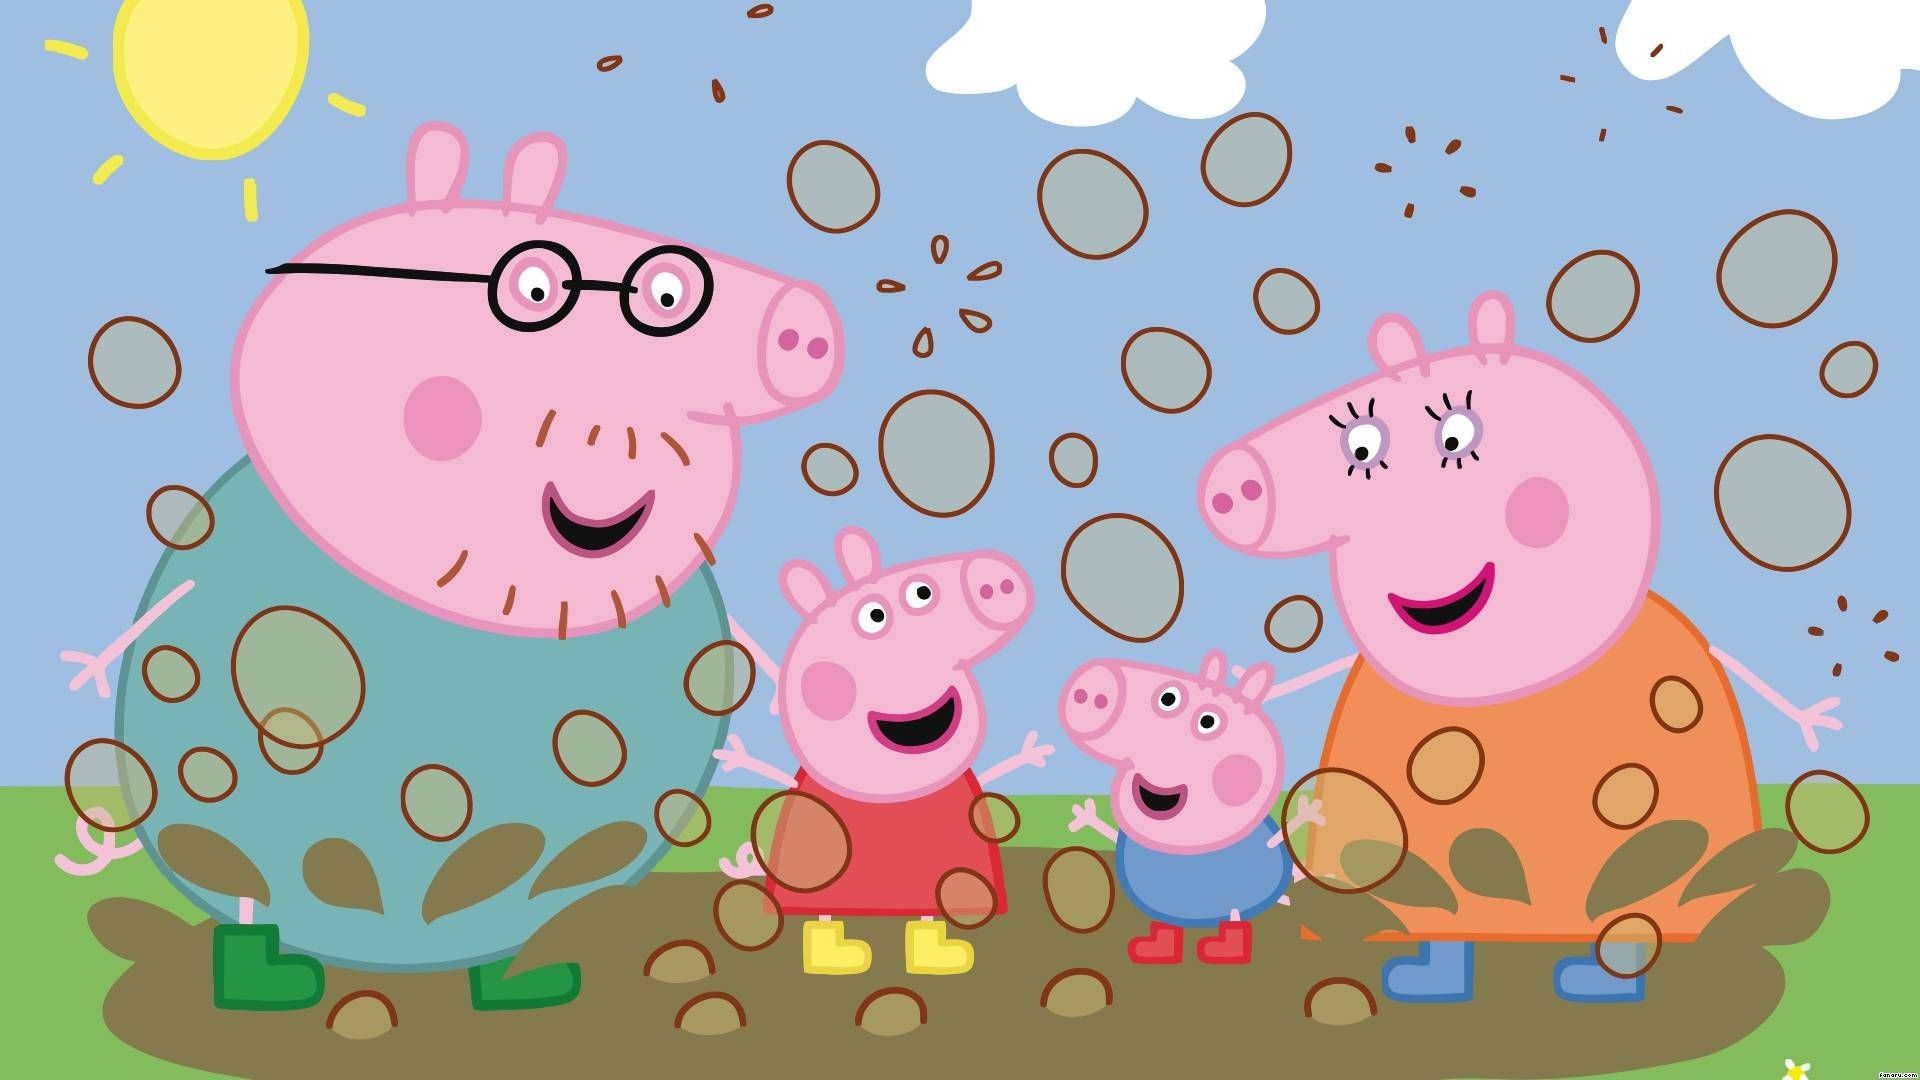 A cartoon of pepa and his family - Peppa Pig, George Pig